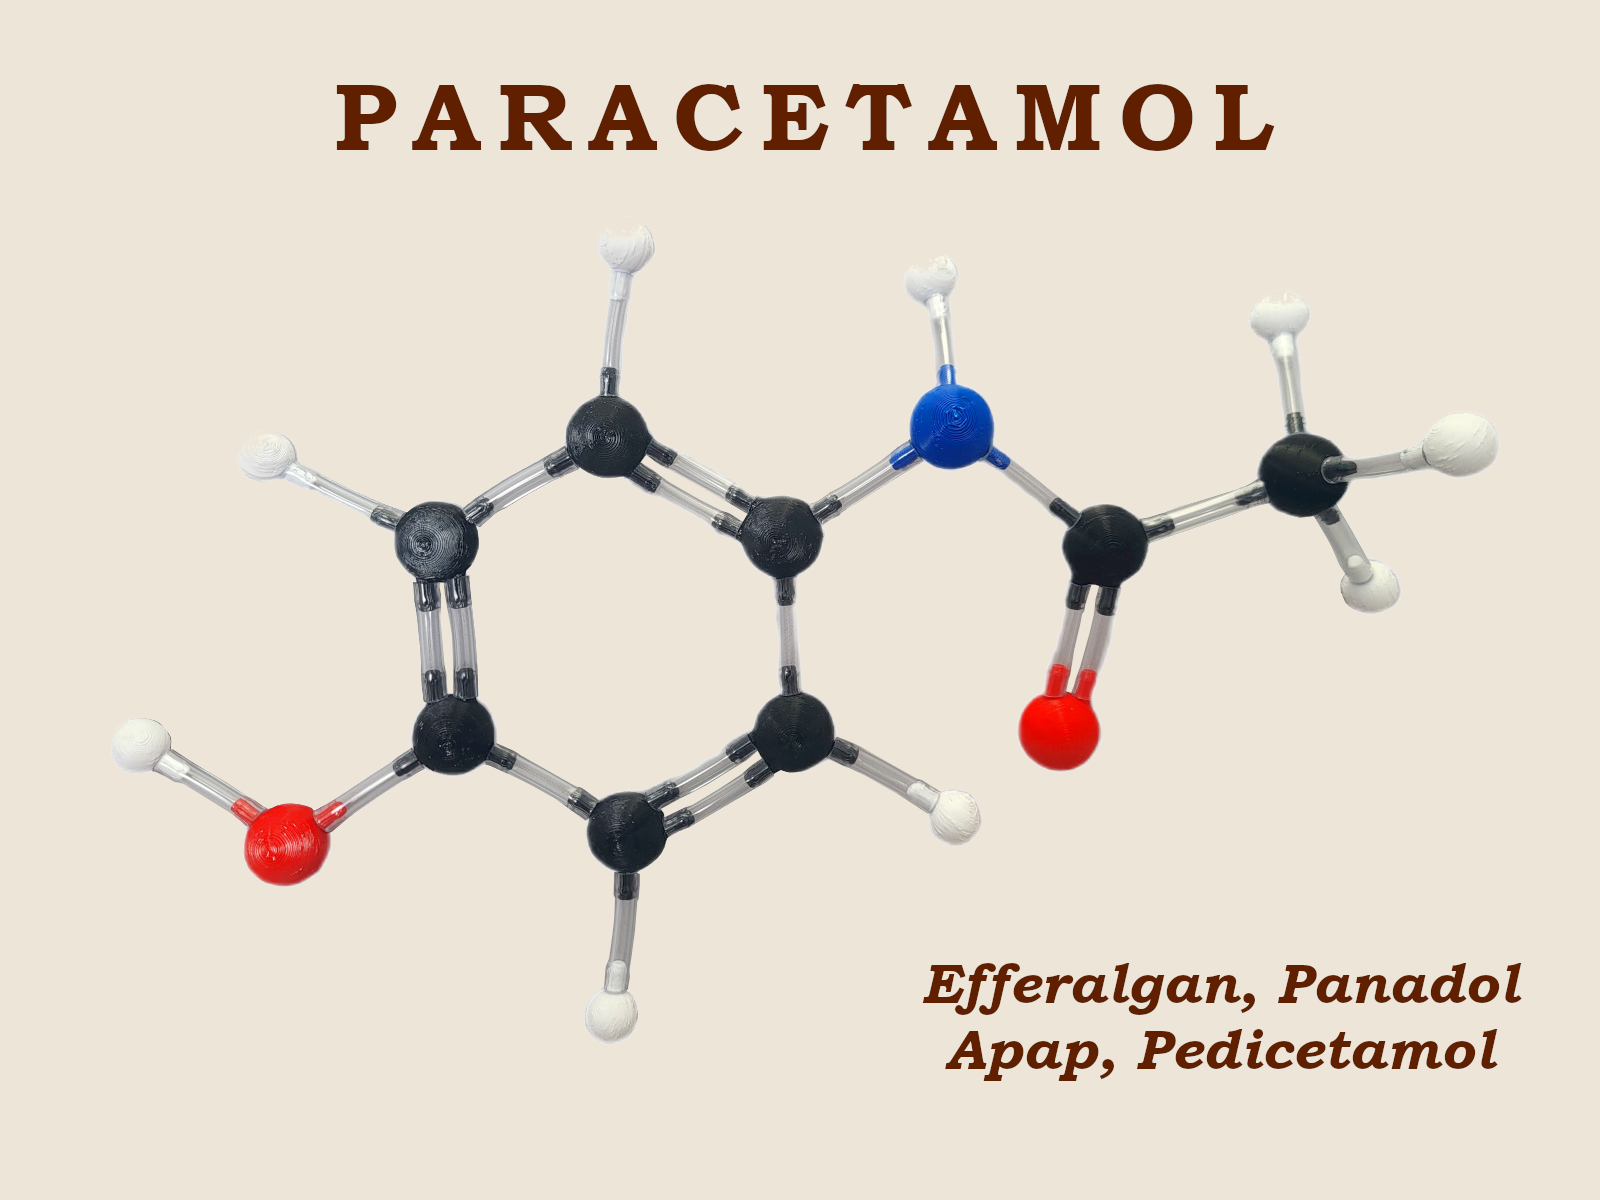 paracetamol, apap, efferalgan, panadol, pedicetamol